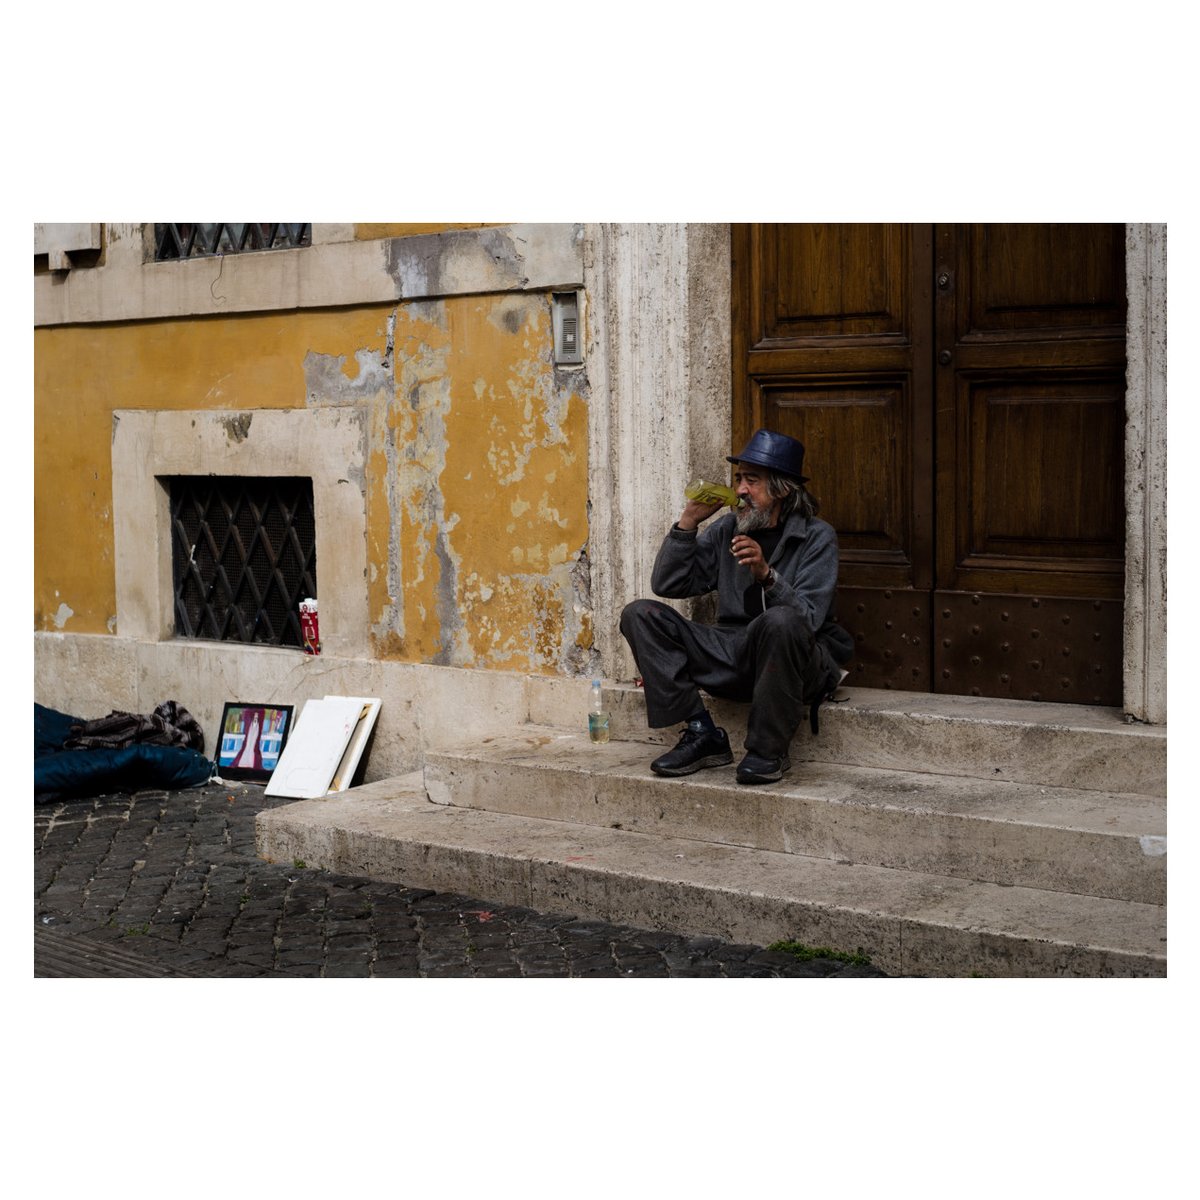 Roman Holiday IV. #Roma #blackandwhitephotography #streetphotography #sonyalpha #streetleaks #sonya7riv #sonnar #zeisslens #zeiss55mm18 #photocz #fotocz